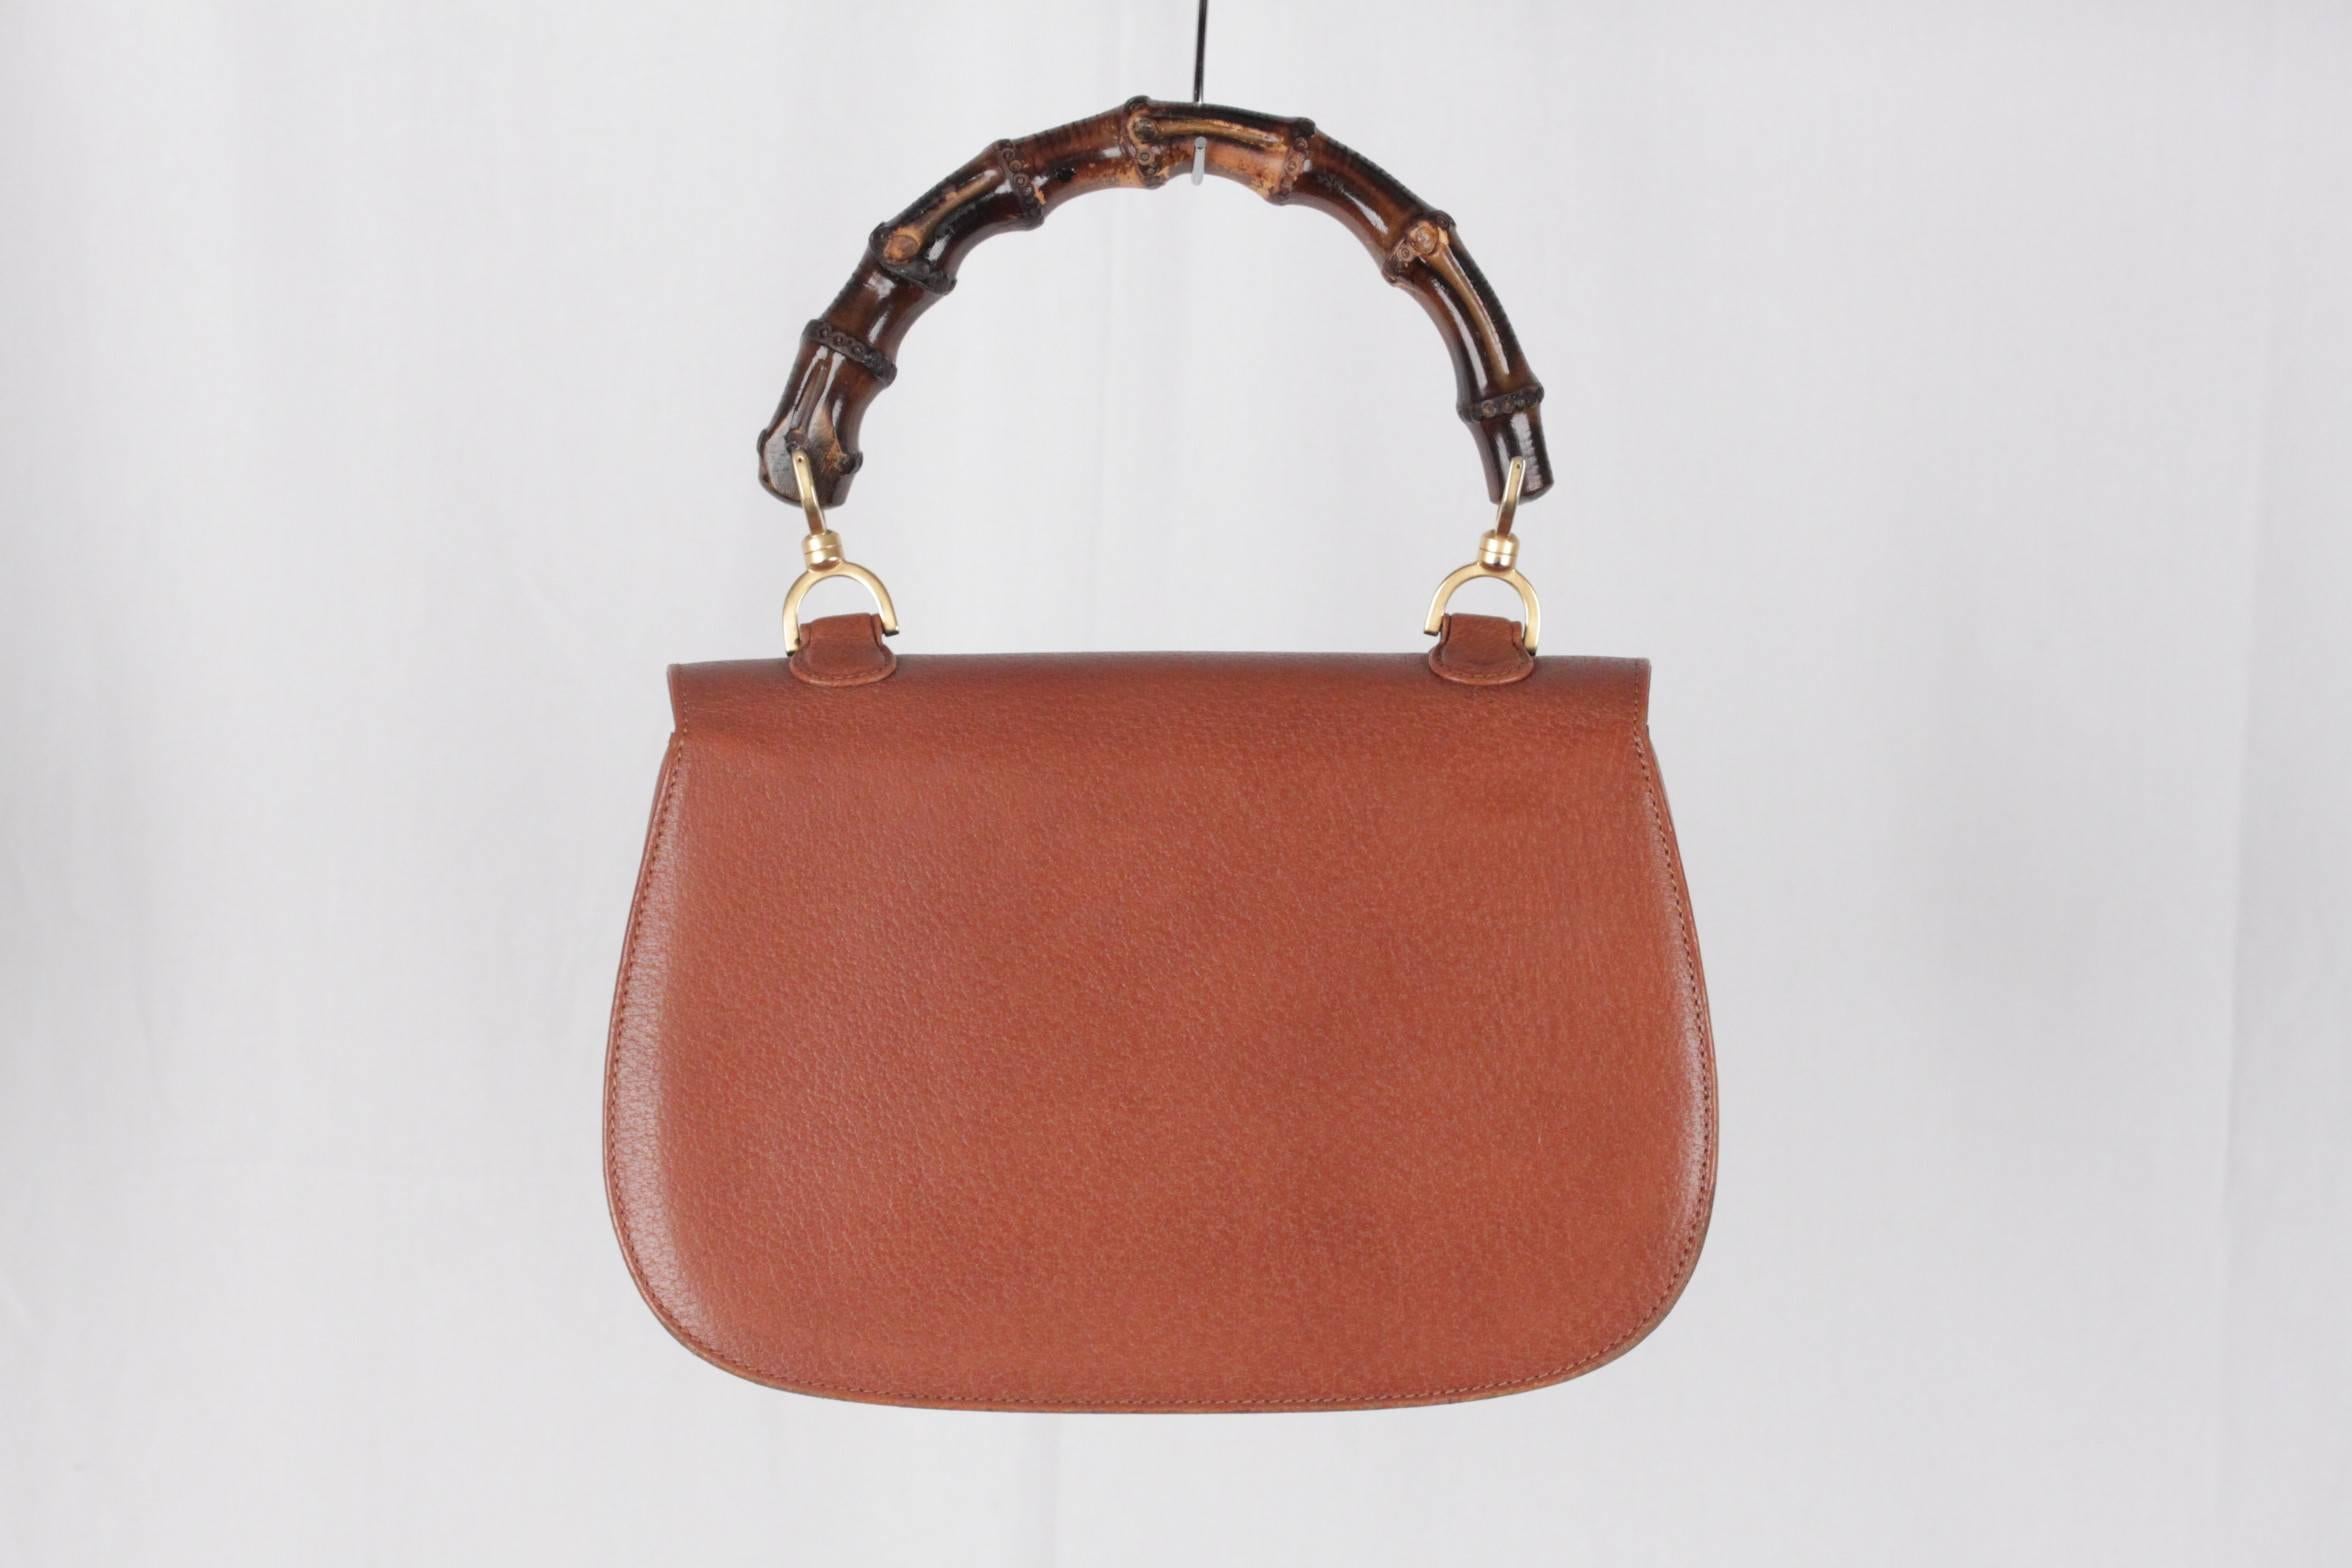 Brown GUCCI Tan Leather BAMBOO BAG Top Handle Handbag PURSE